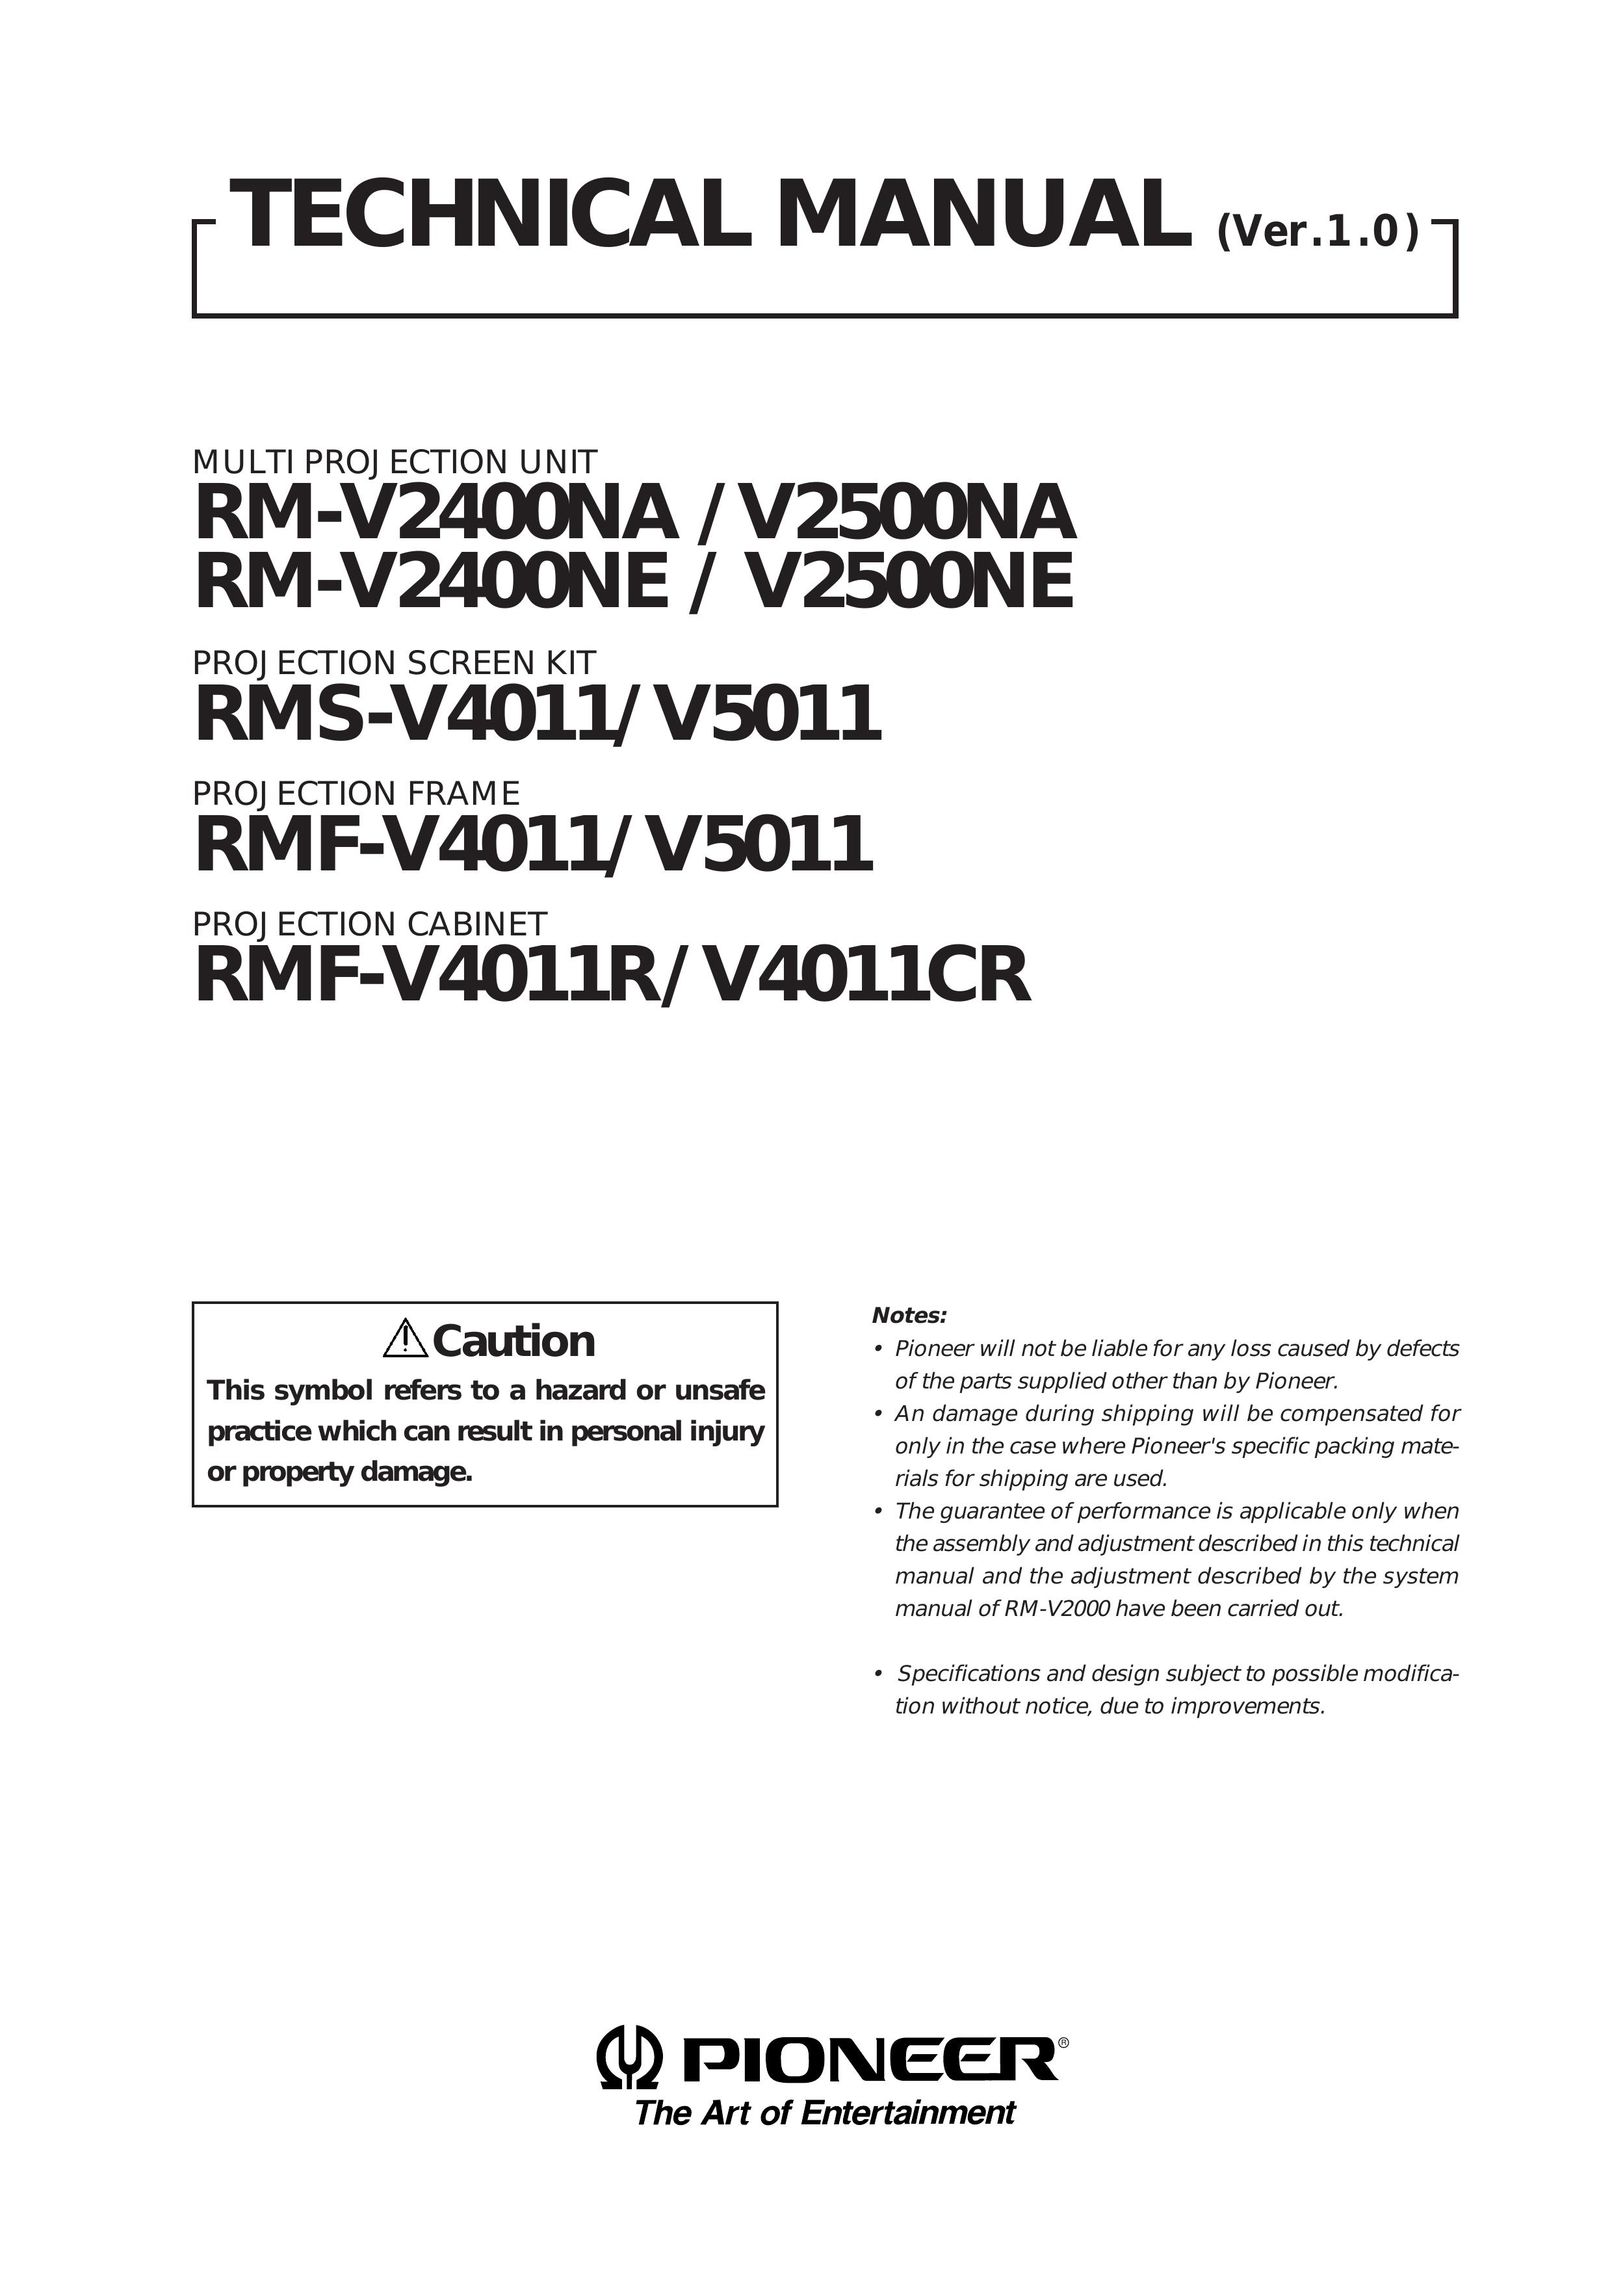 Pioneer V2500NA Projector User Manual